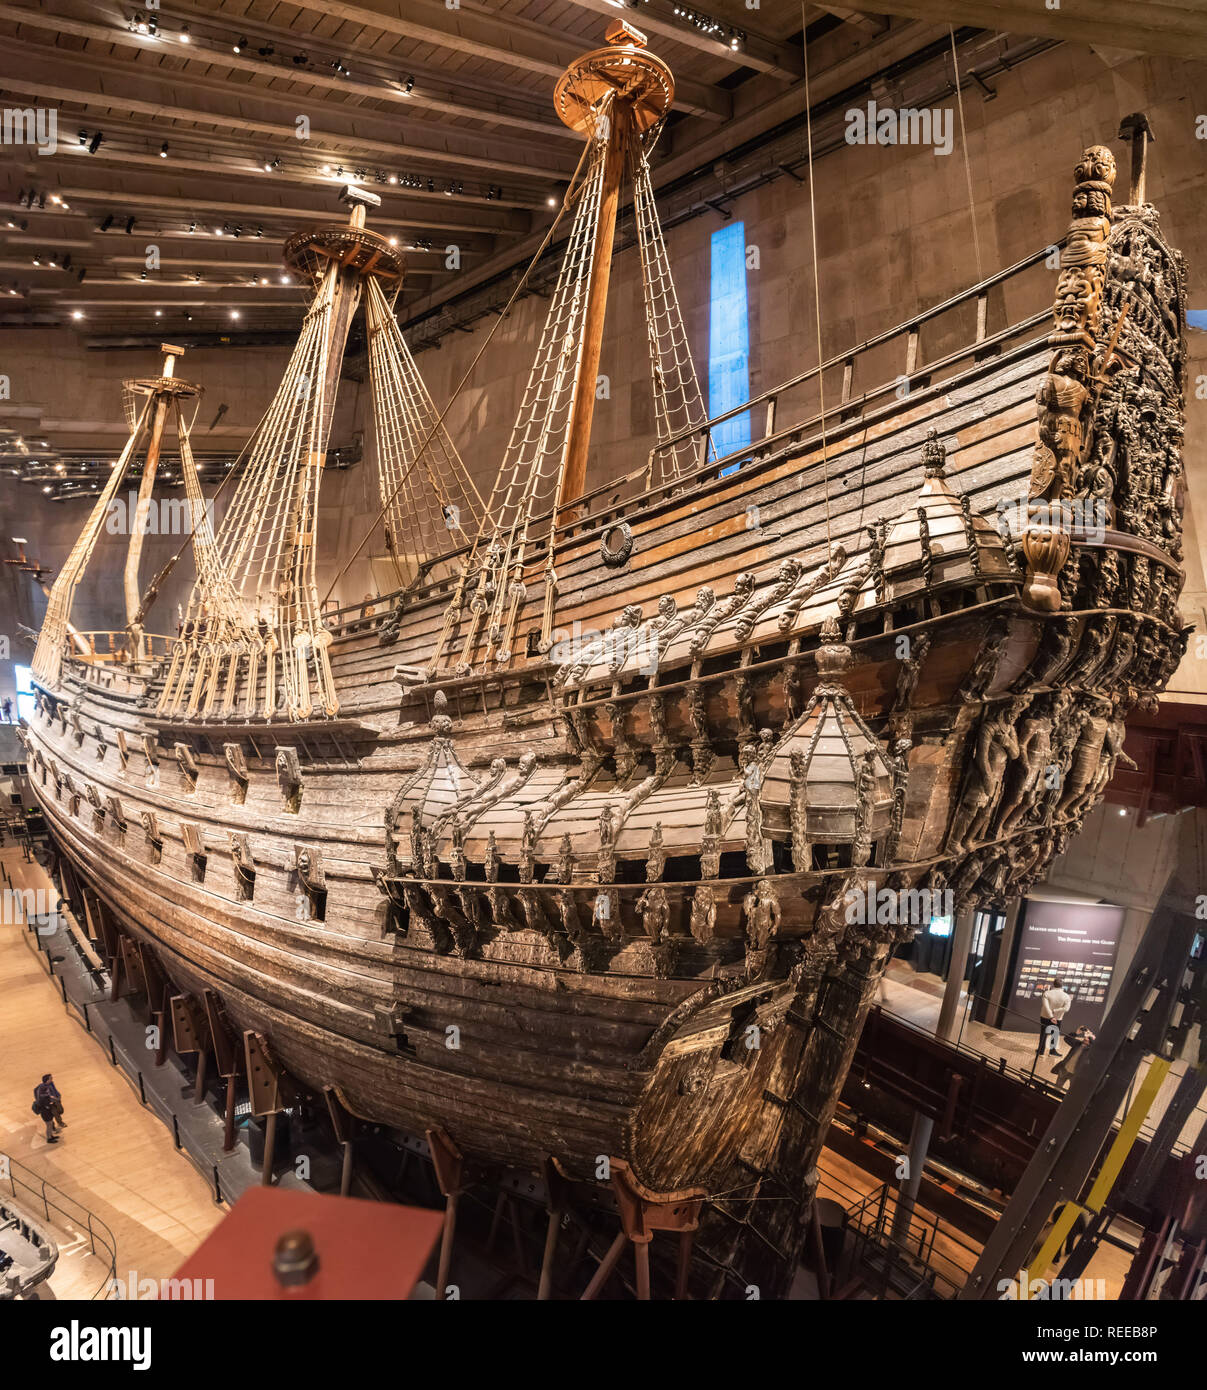 Stockholm, Sweden - November 18, 2018. 17th century warship Vasa displayed at Vasa Museum (Vasamuseet) in Stockholm. Stock Photo